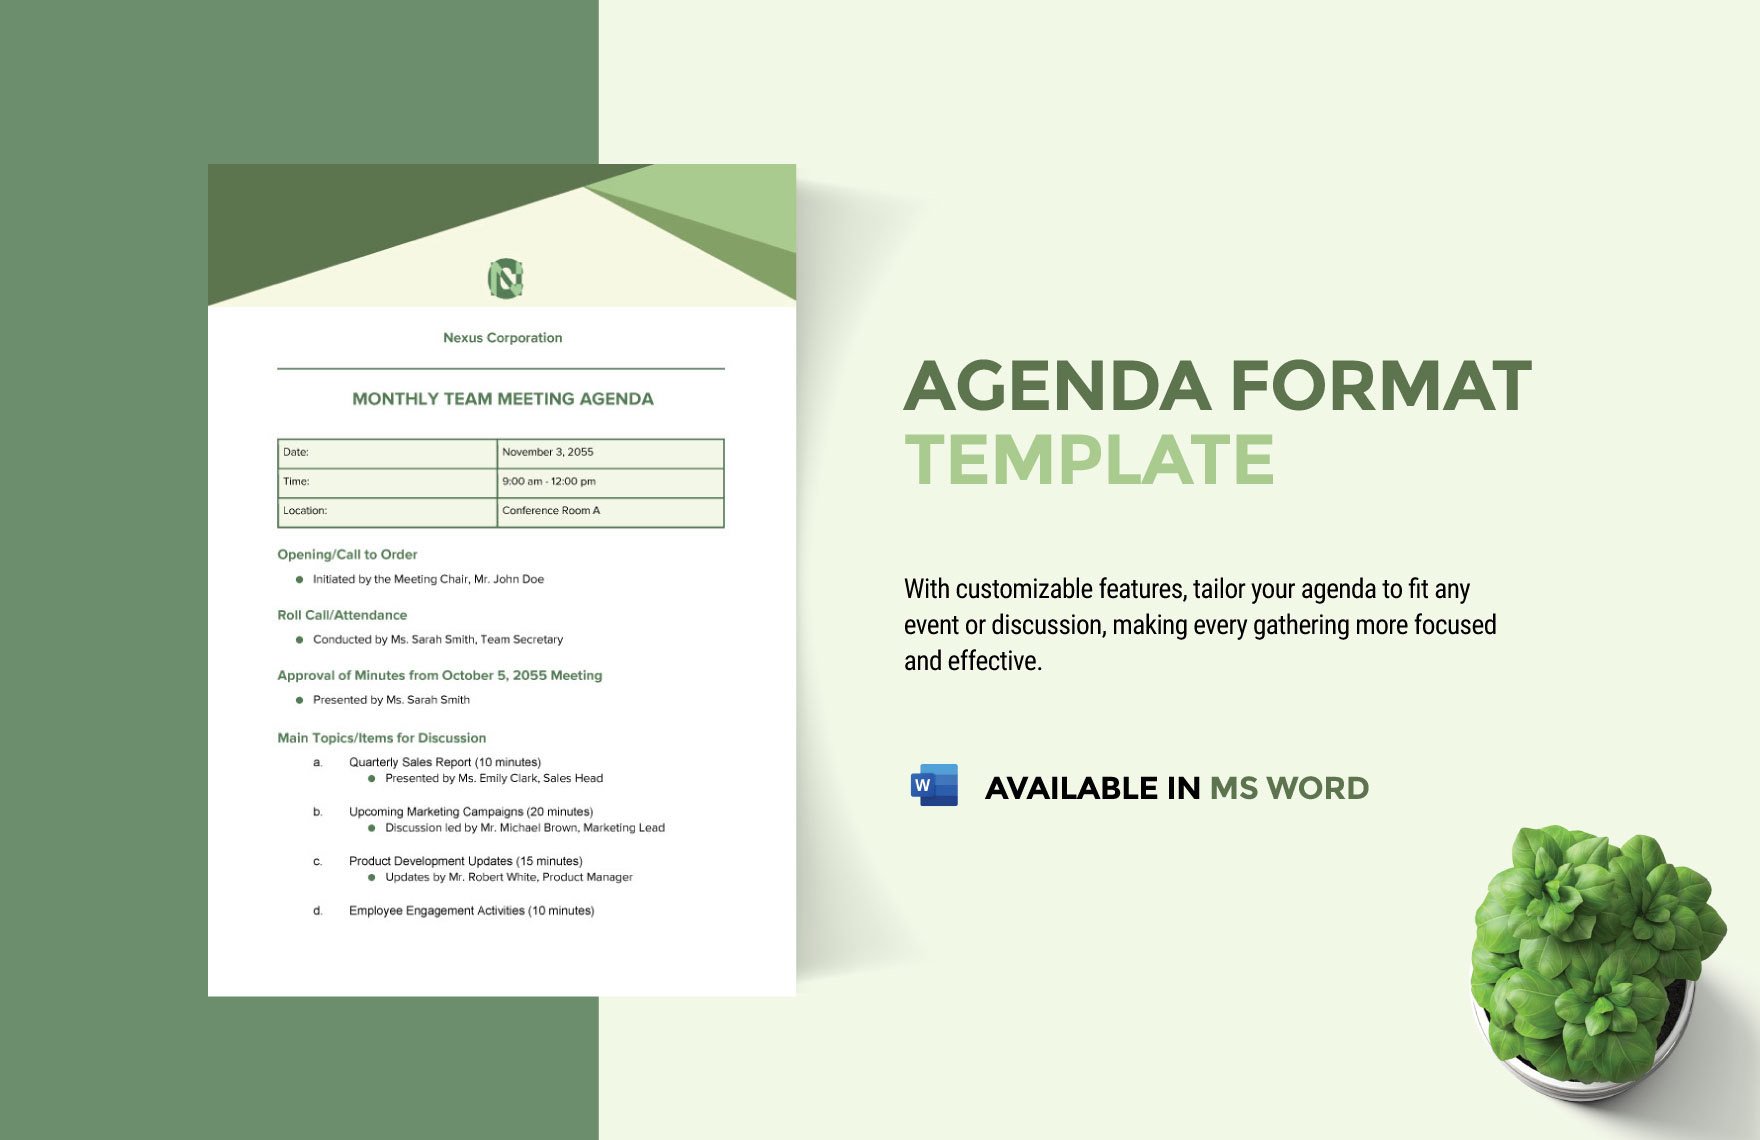 Agenda Format Template